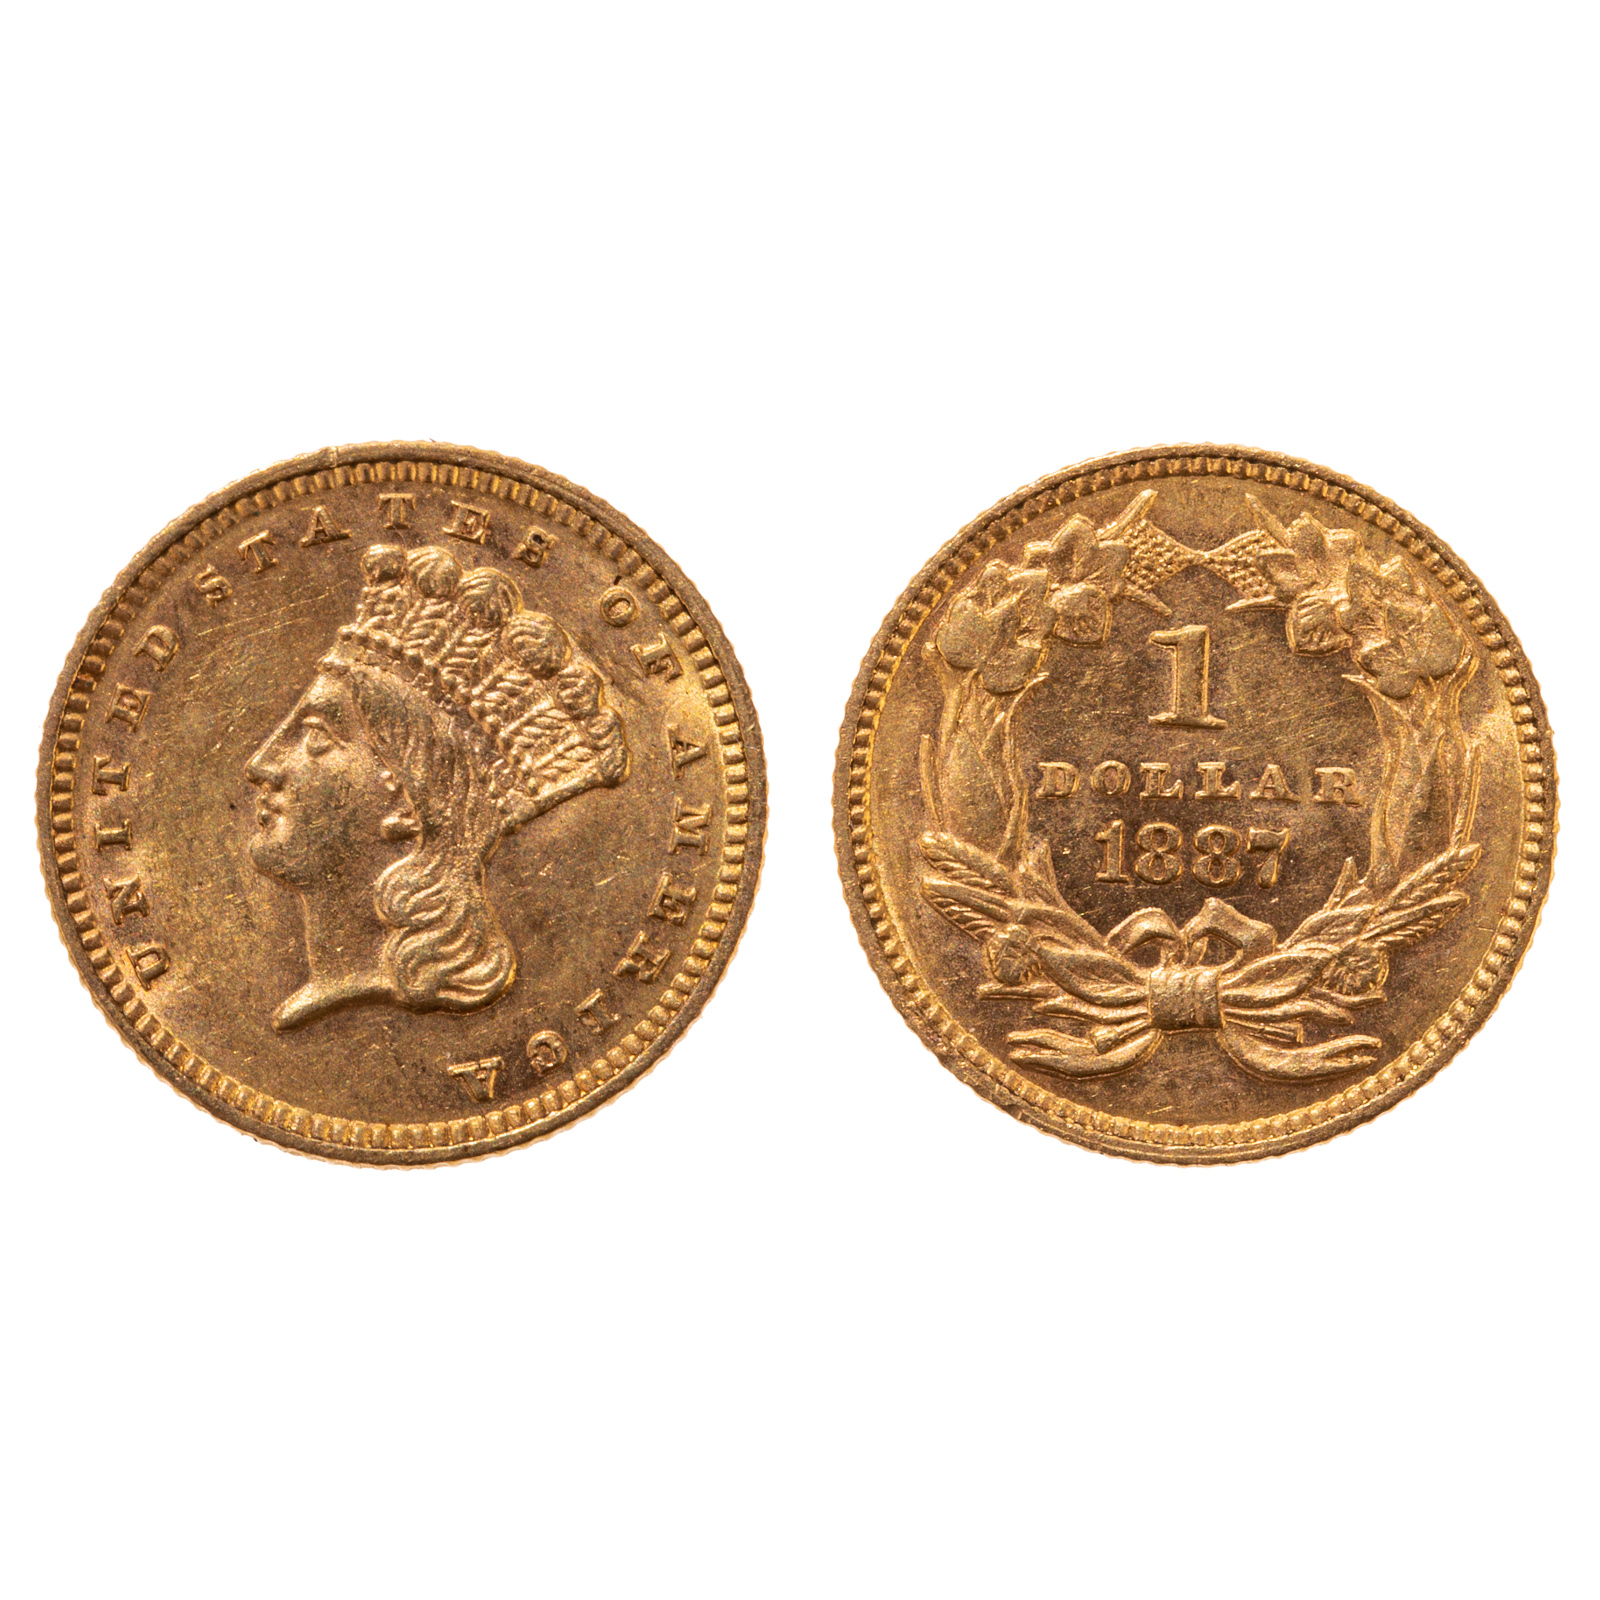 1887 GOLD DOLLAR TYPE 3 AU58 287d68